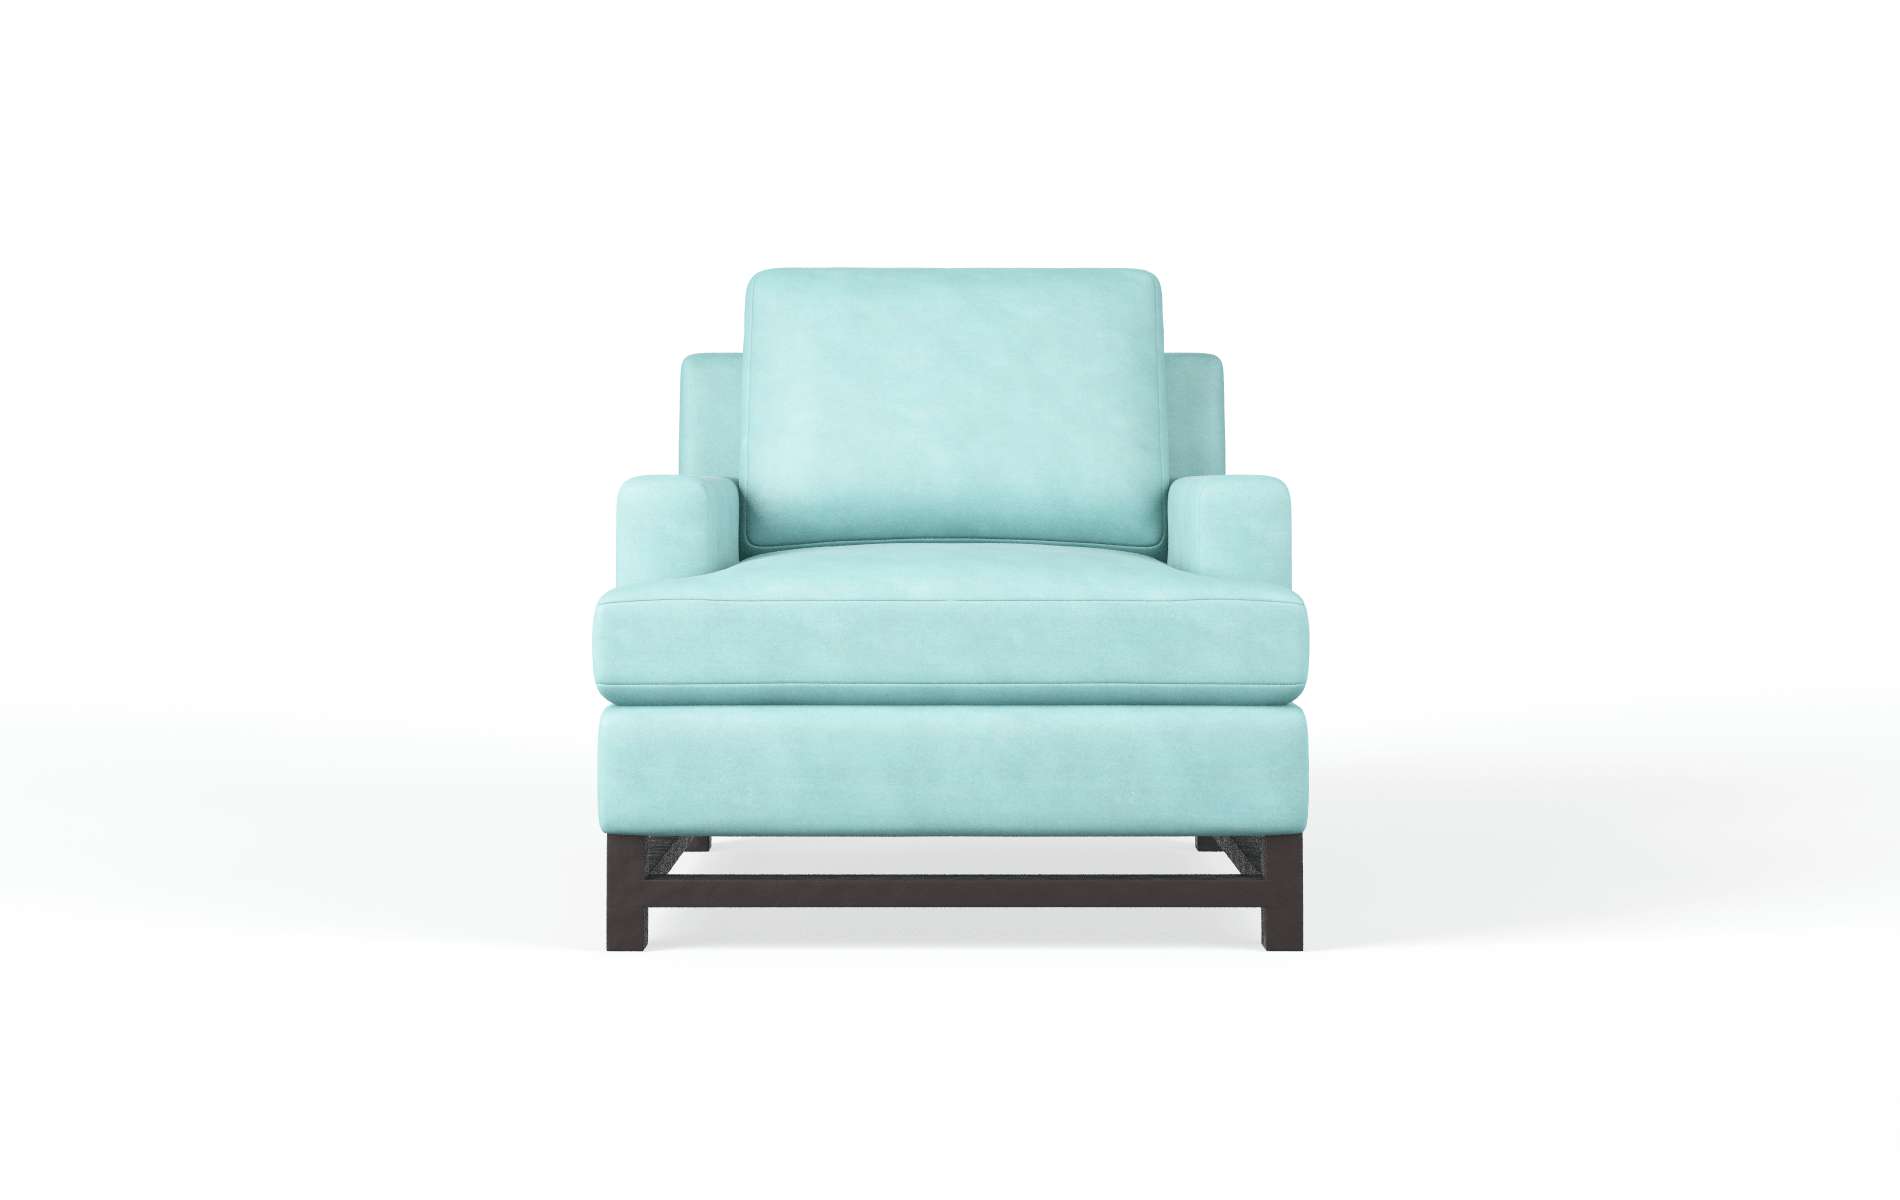 Houston Curious Turquoise chair espresso legs